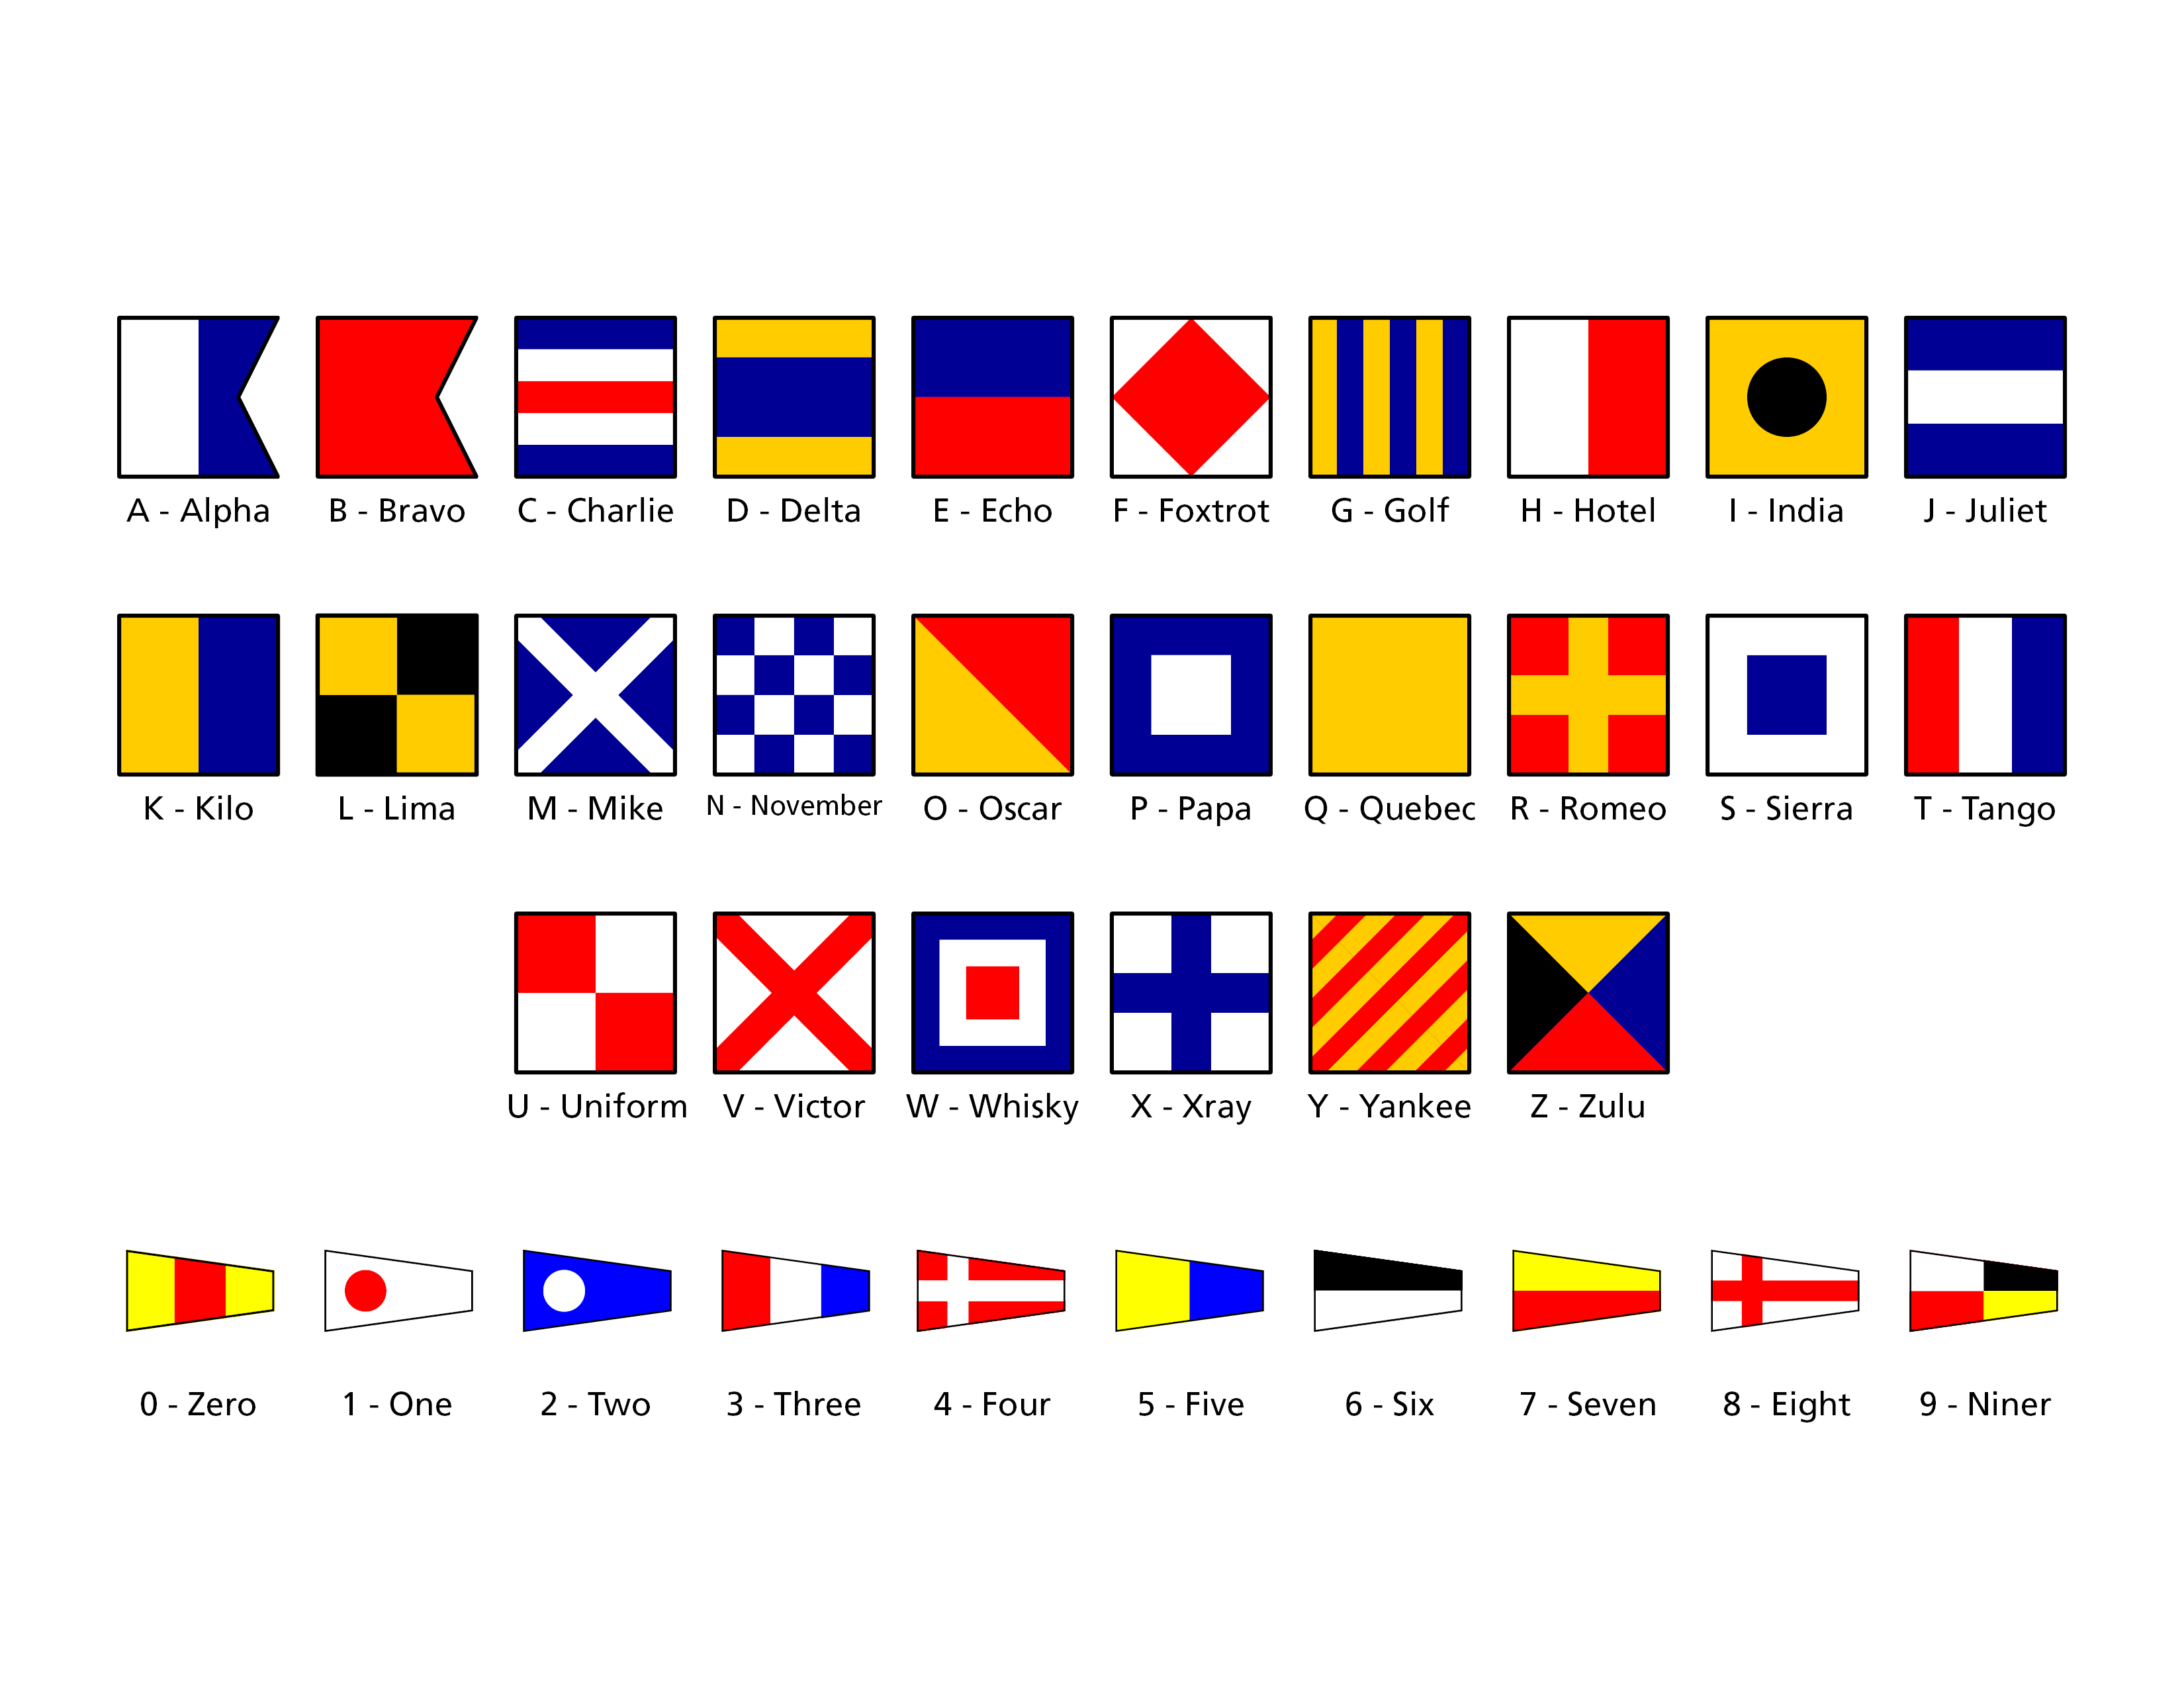 Maritime Code Flags